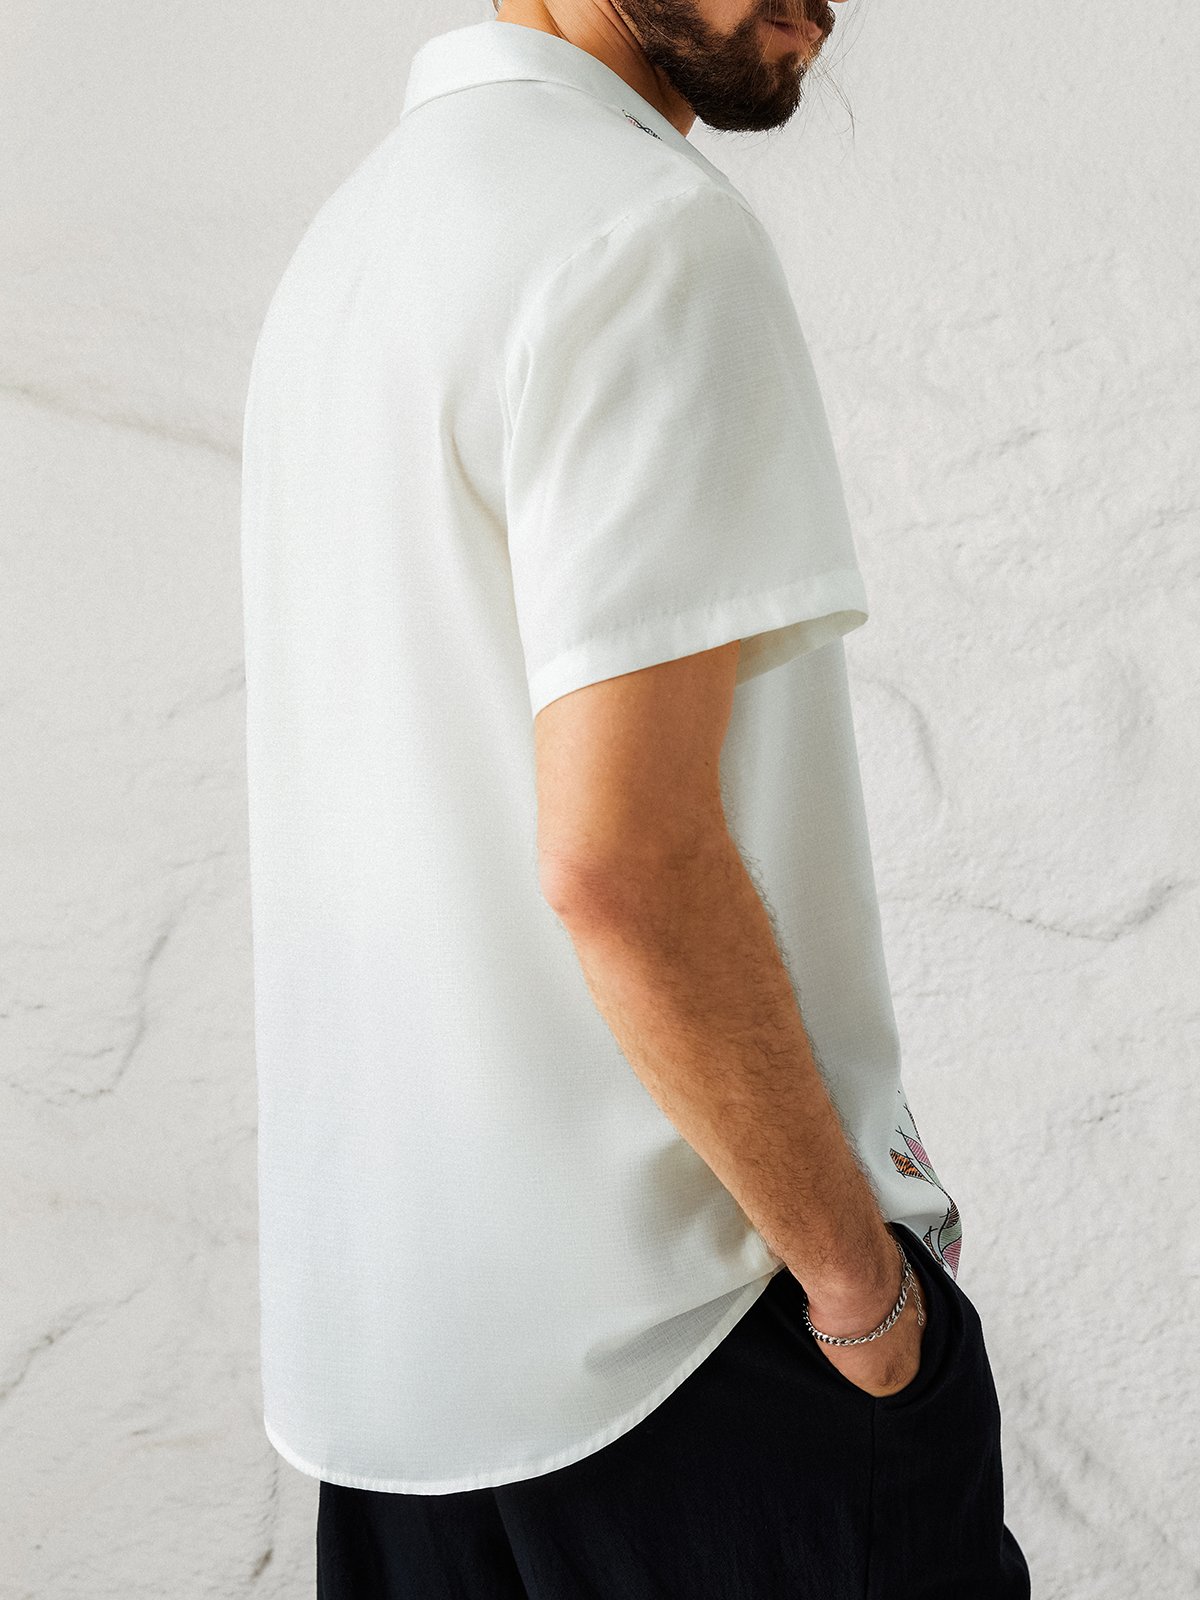 Cotton Linen Style Geometric Print Men's Cotton Linen Short Sleeve Shirt